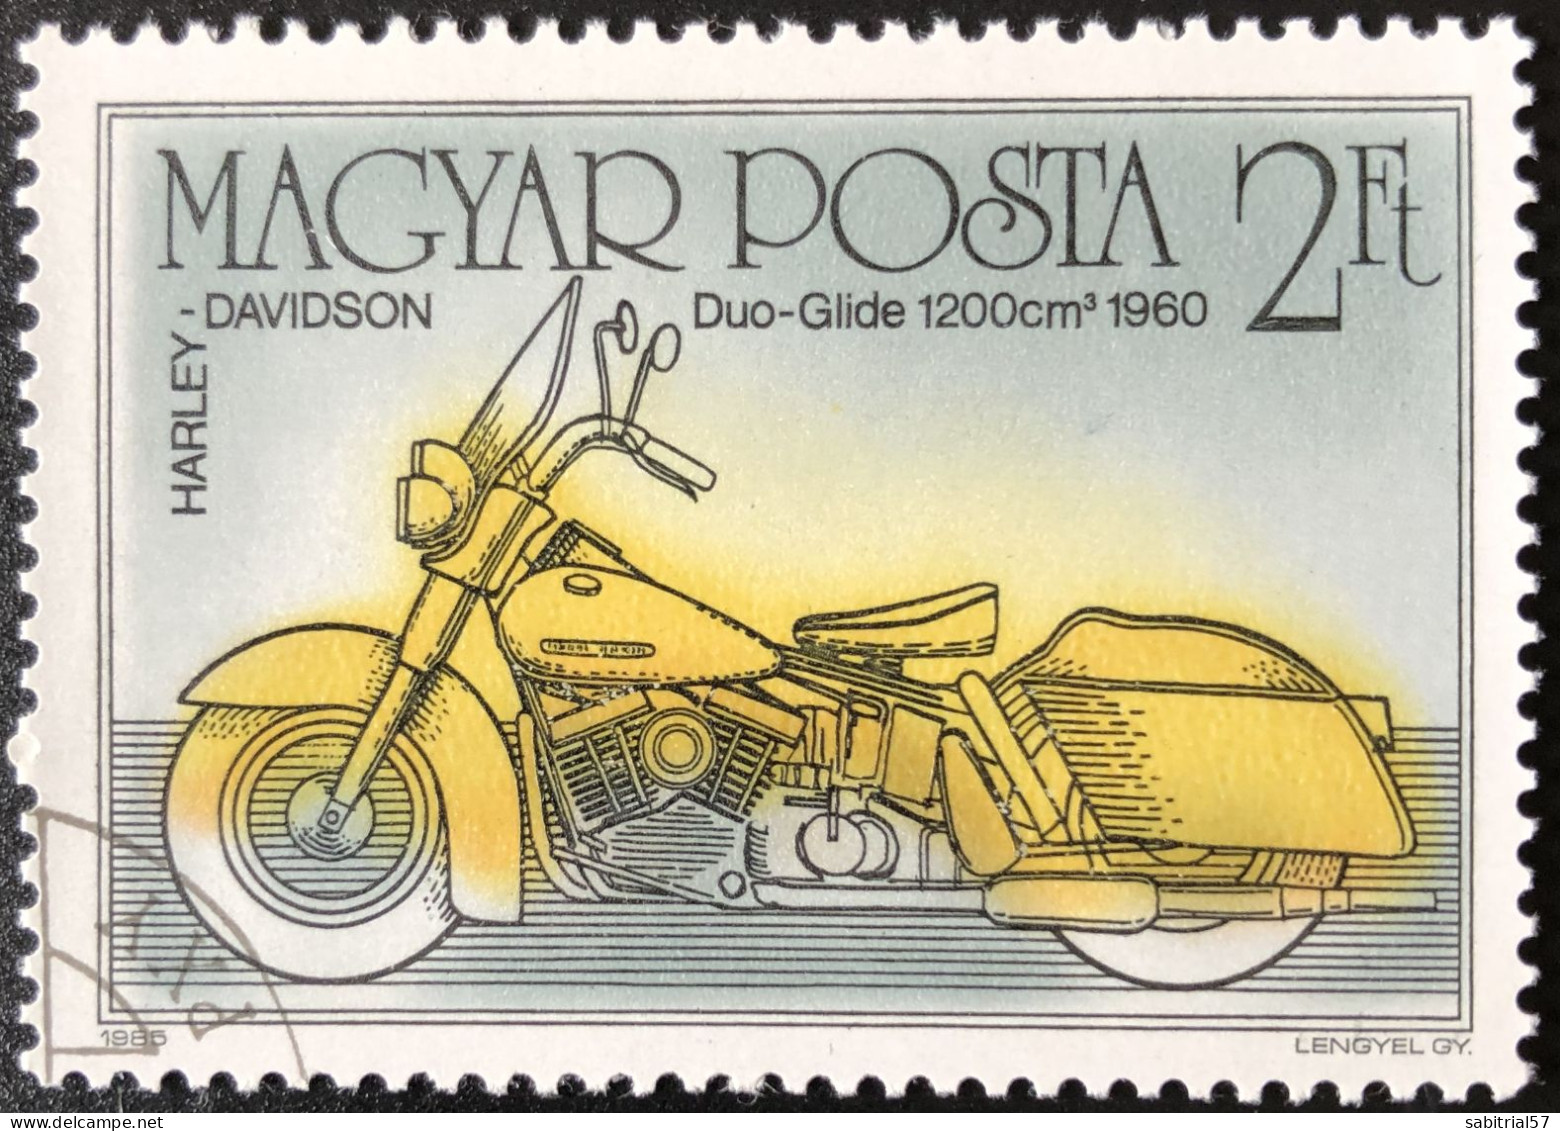 Hungria 1985 CTO / Harley Davidson / Hungary / Hongrie / Motorcycles / Motocyclettes / Motorräder - Motorräder